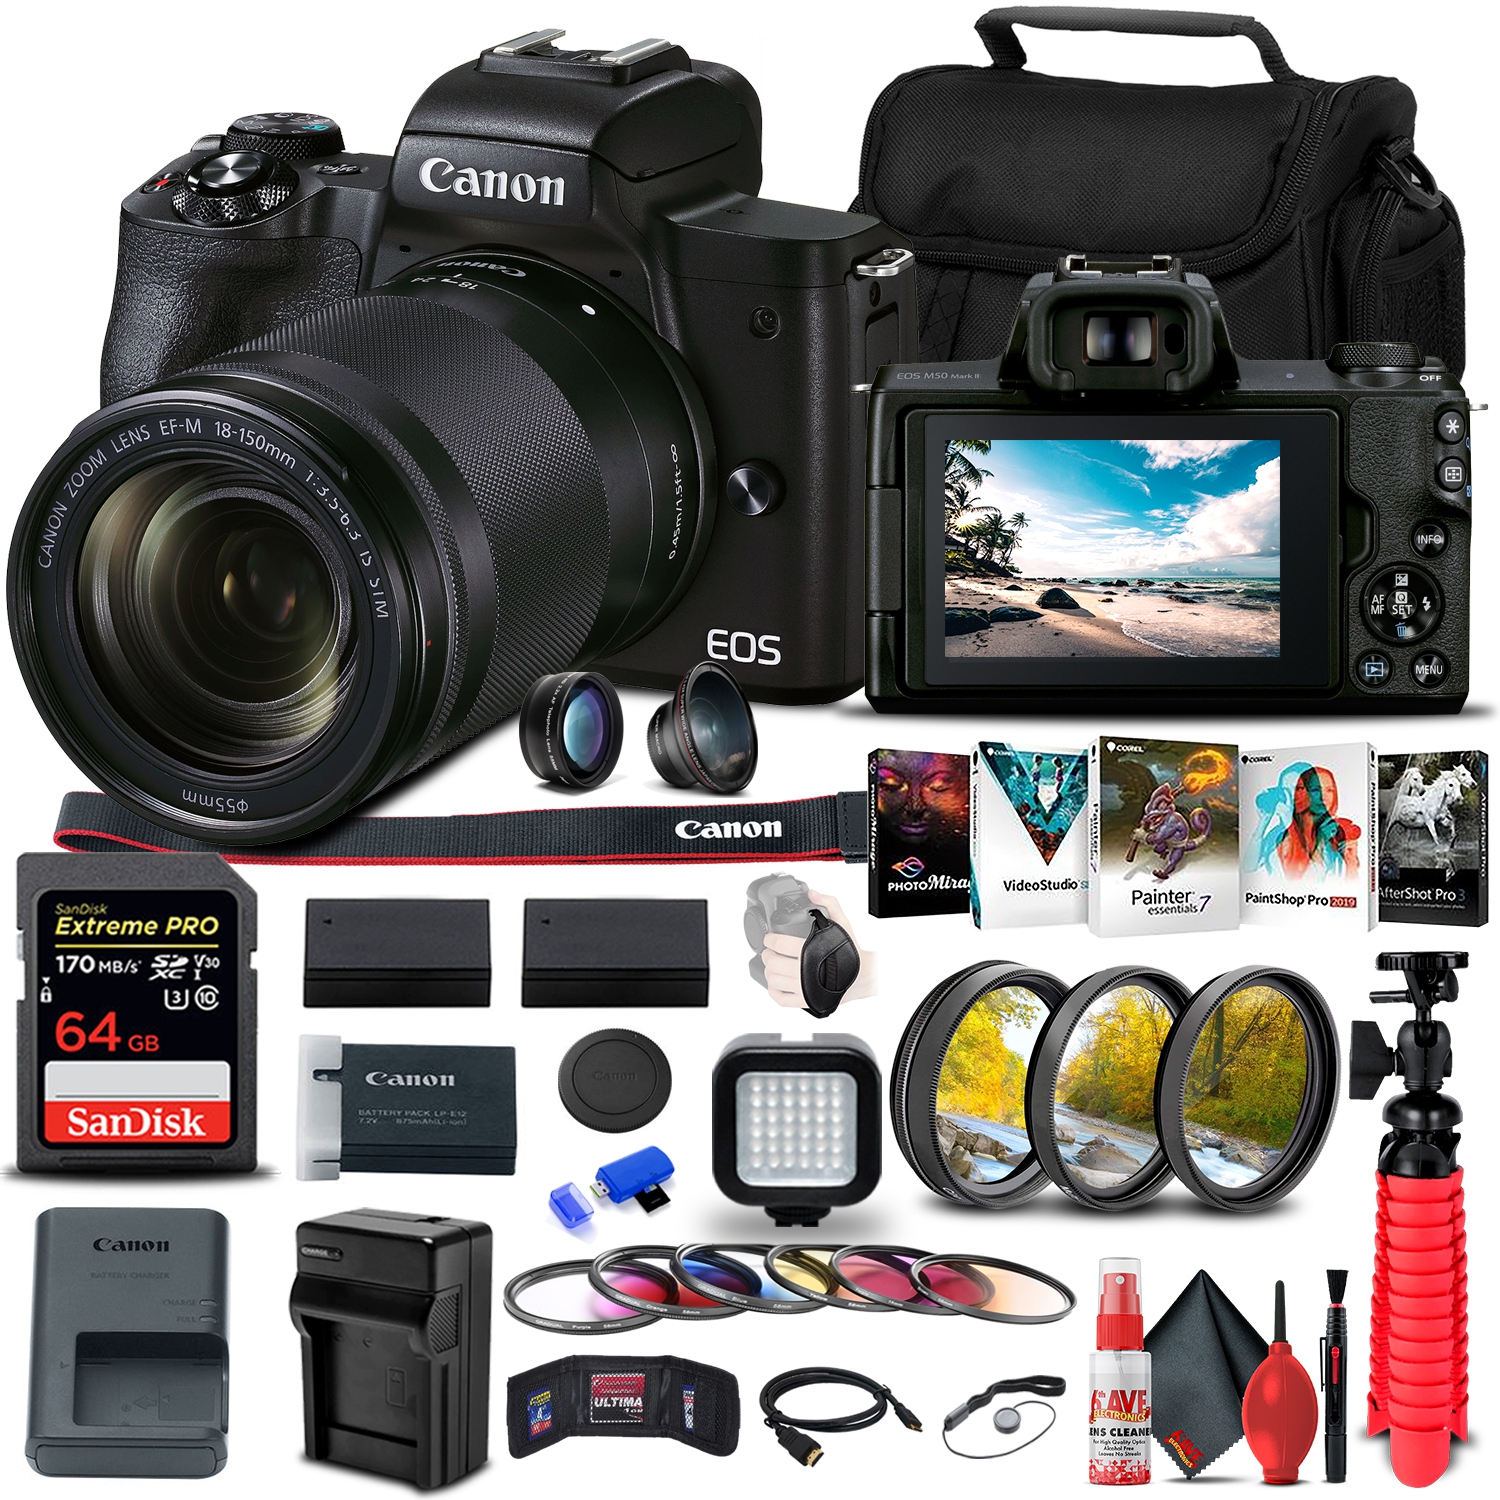 Canon EOS M50 Mark II Mirrorless Camera W/ EF-M 18-150mm Lens + More Bundle